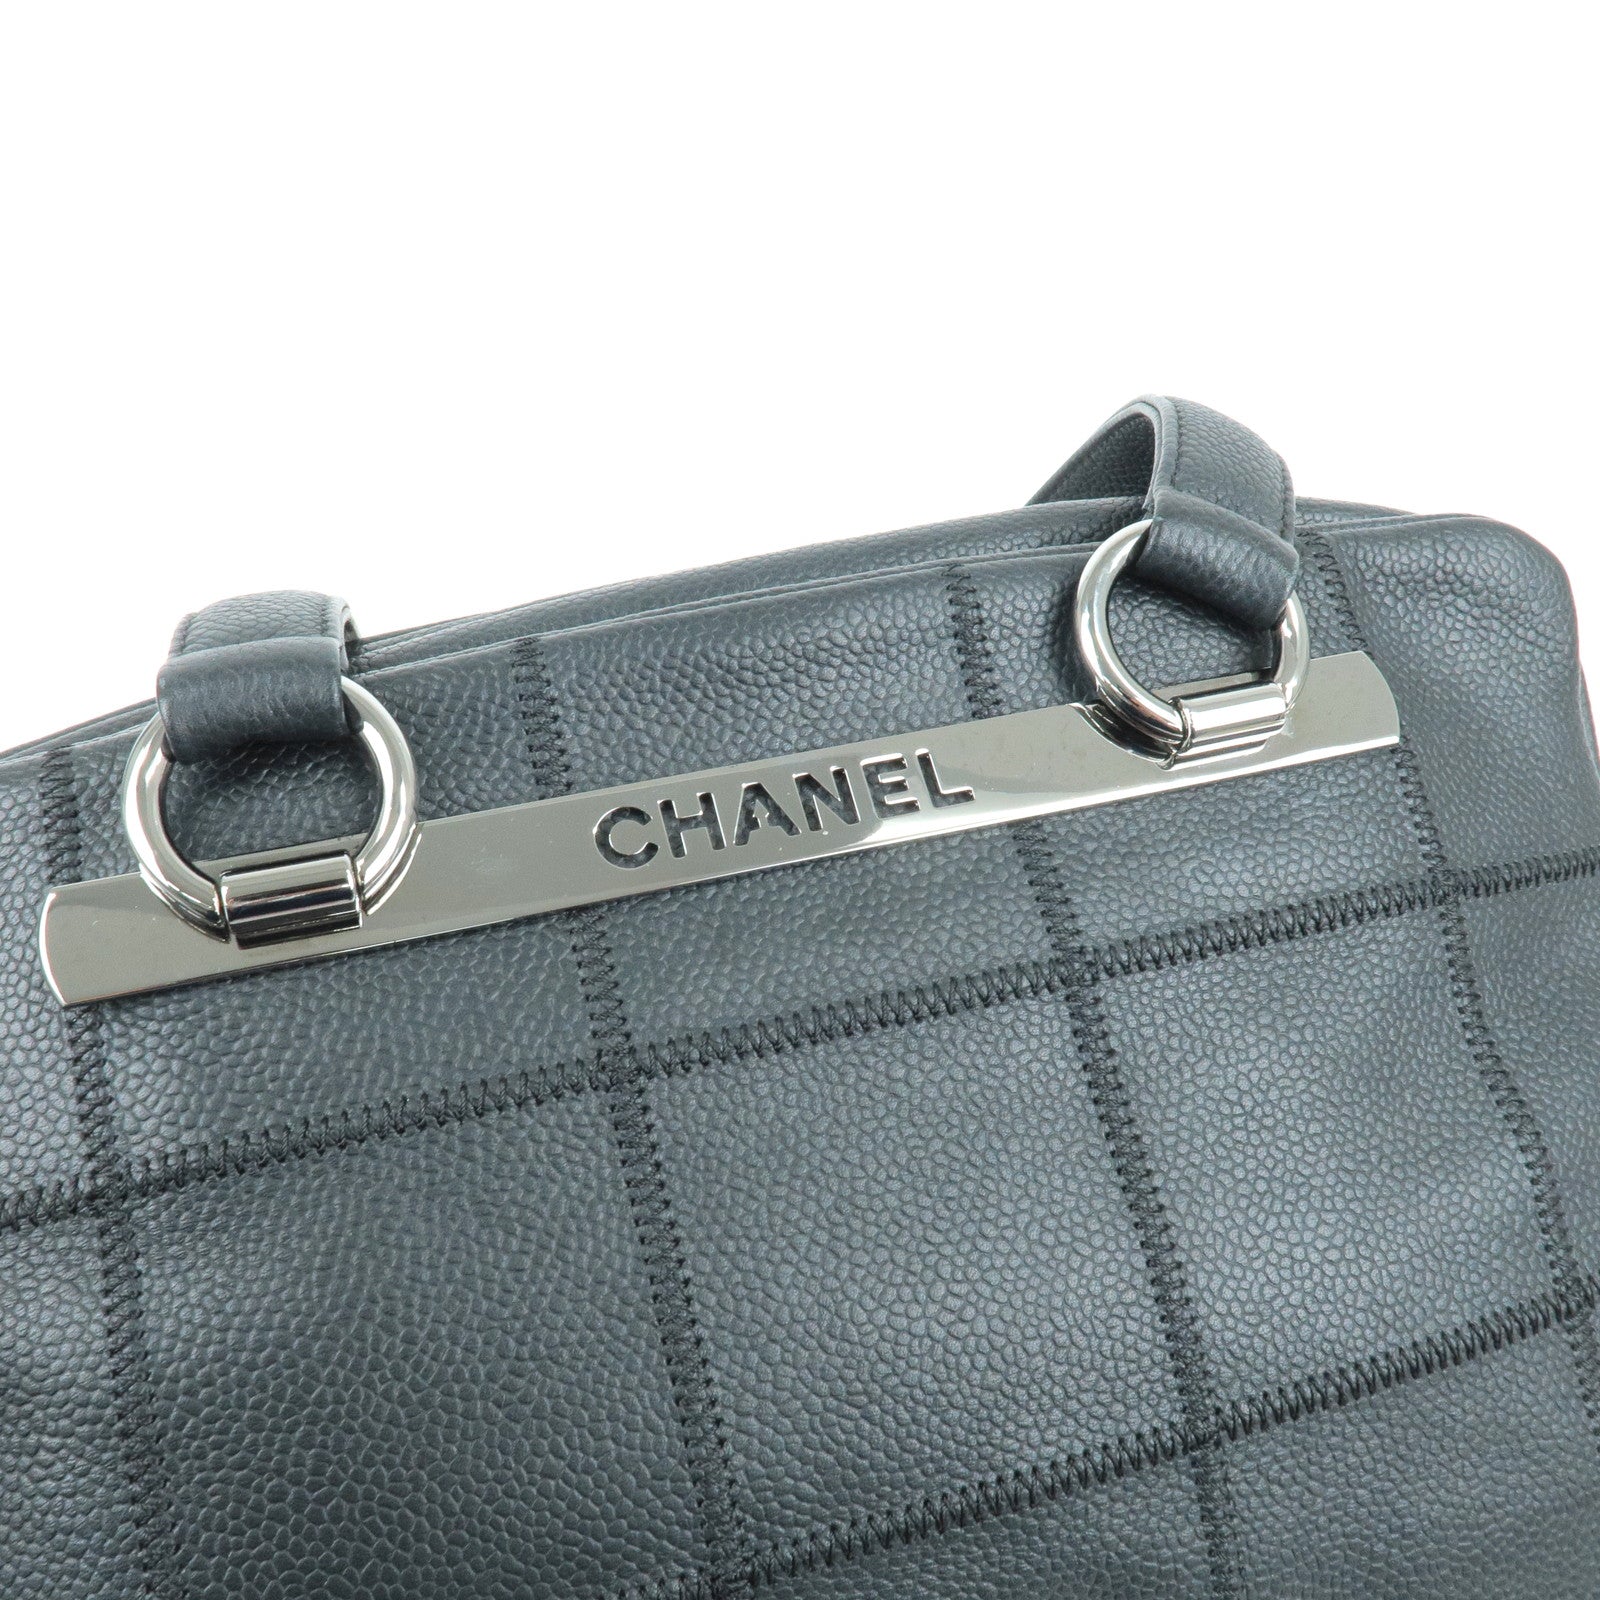 Chanel CHANEL chocolate bar bag Boston shoulder ladies